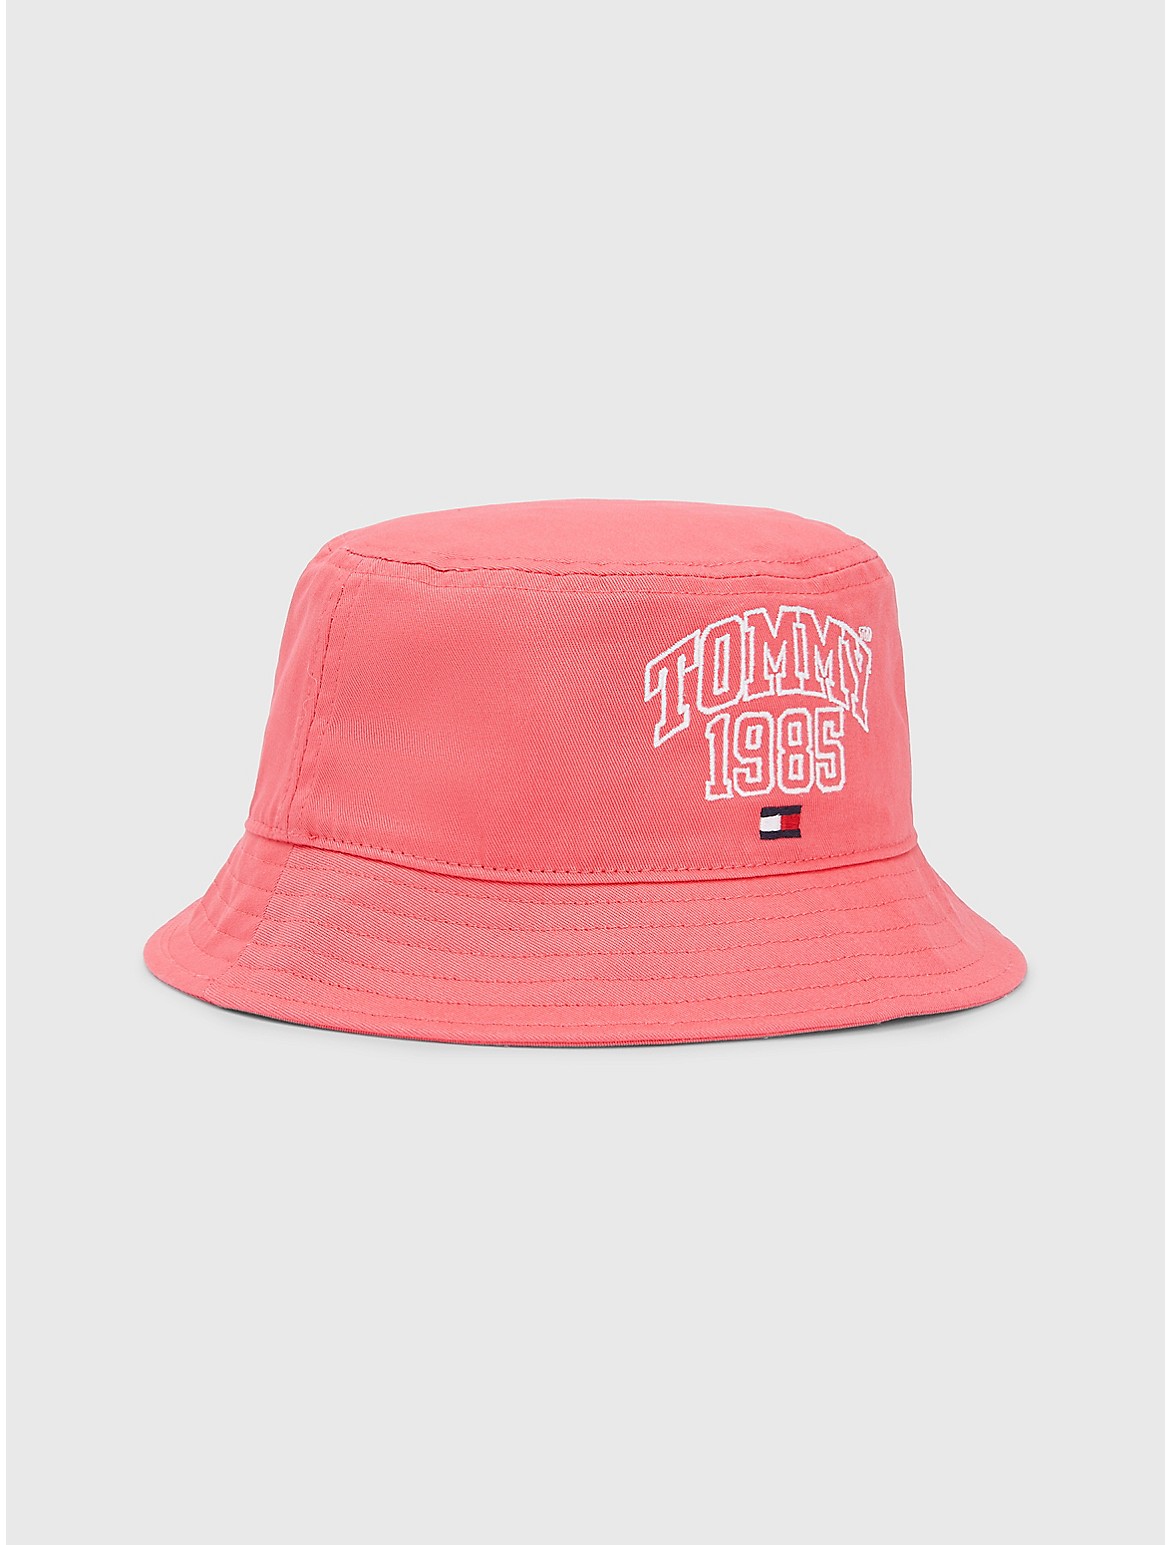 Tommy Hilfiger Kids' Varsity Bucket Hat - Pink - S-M